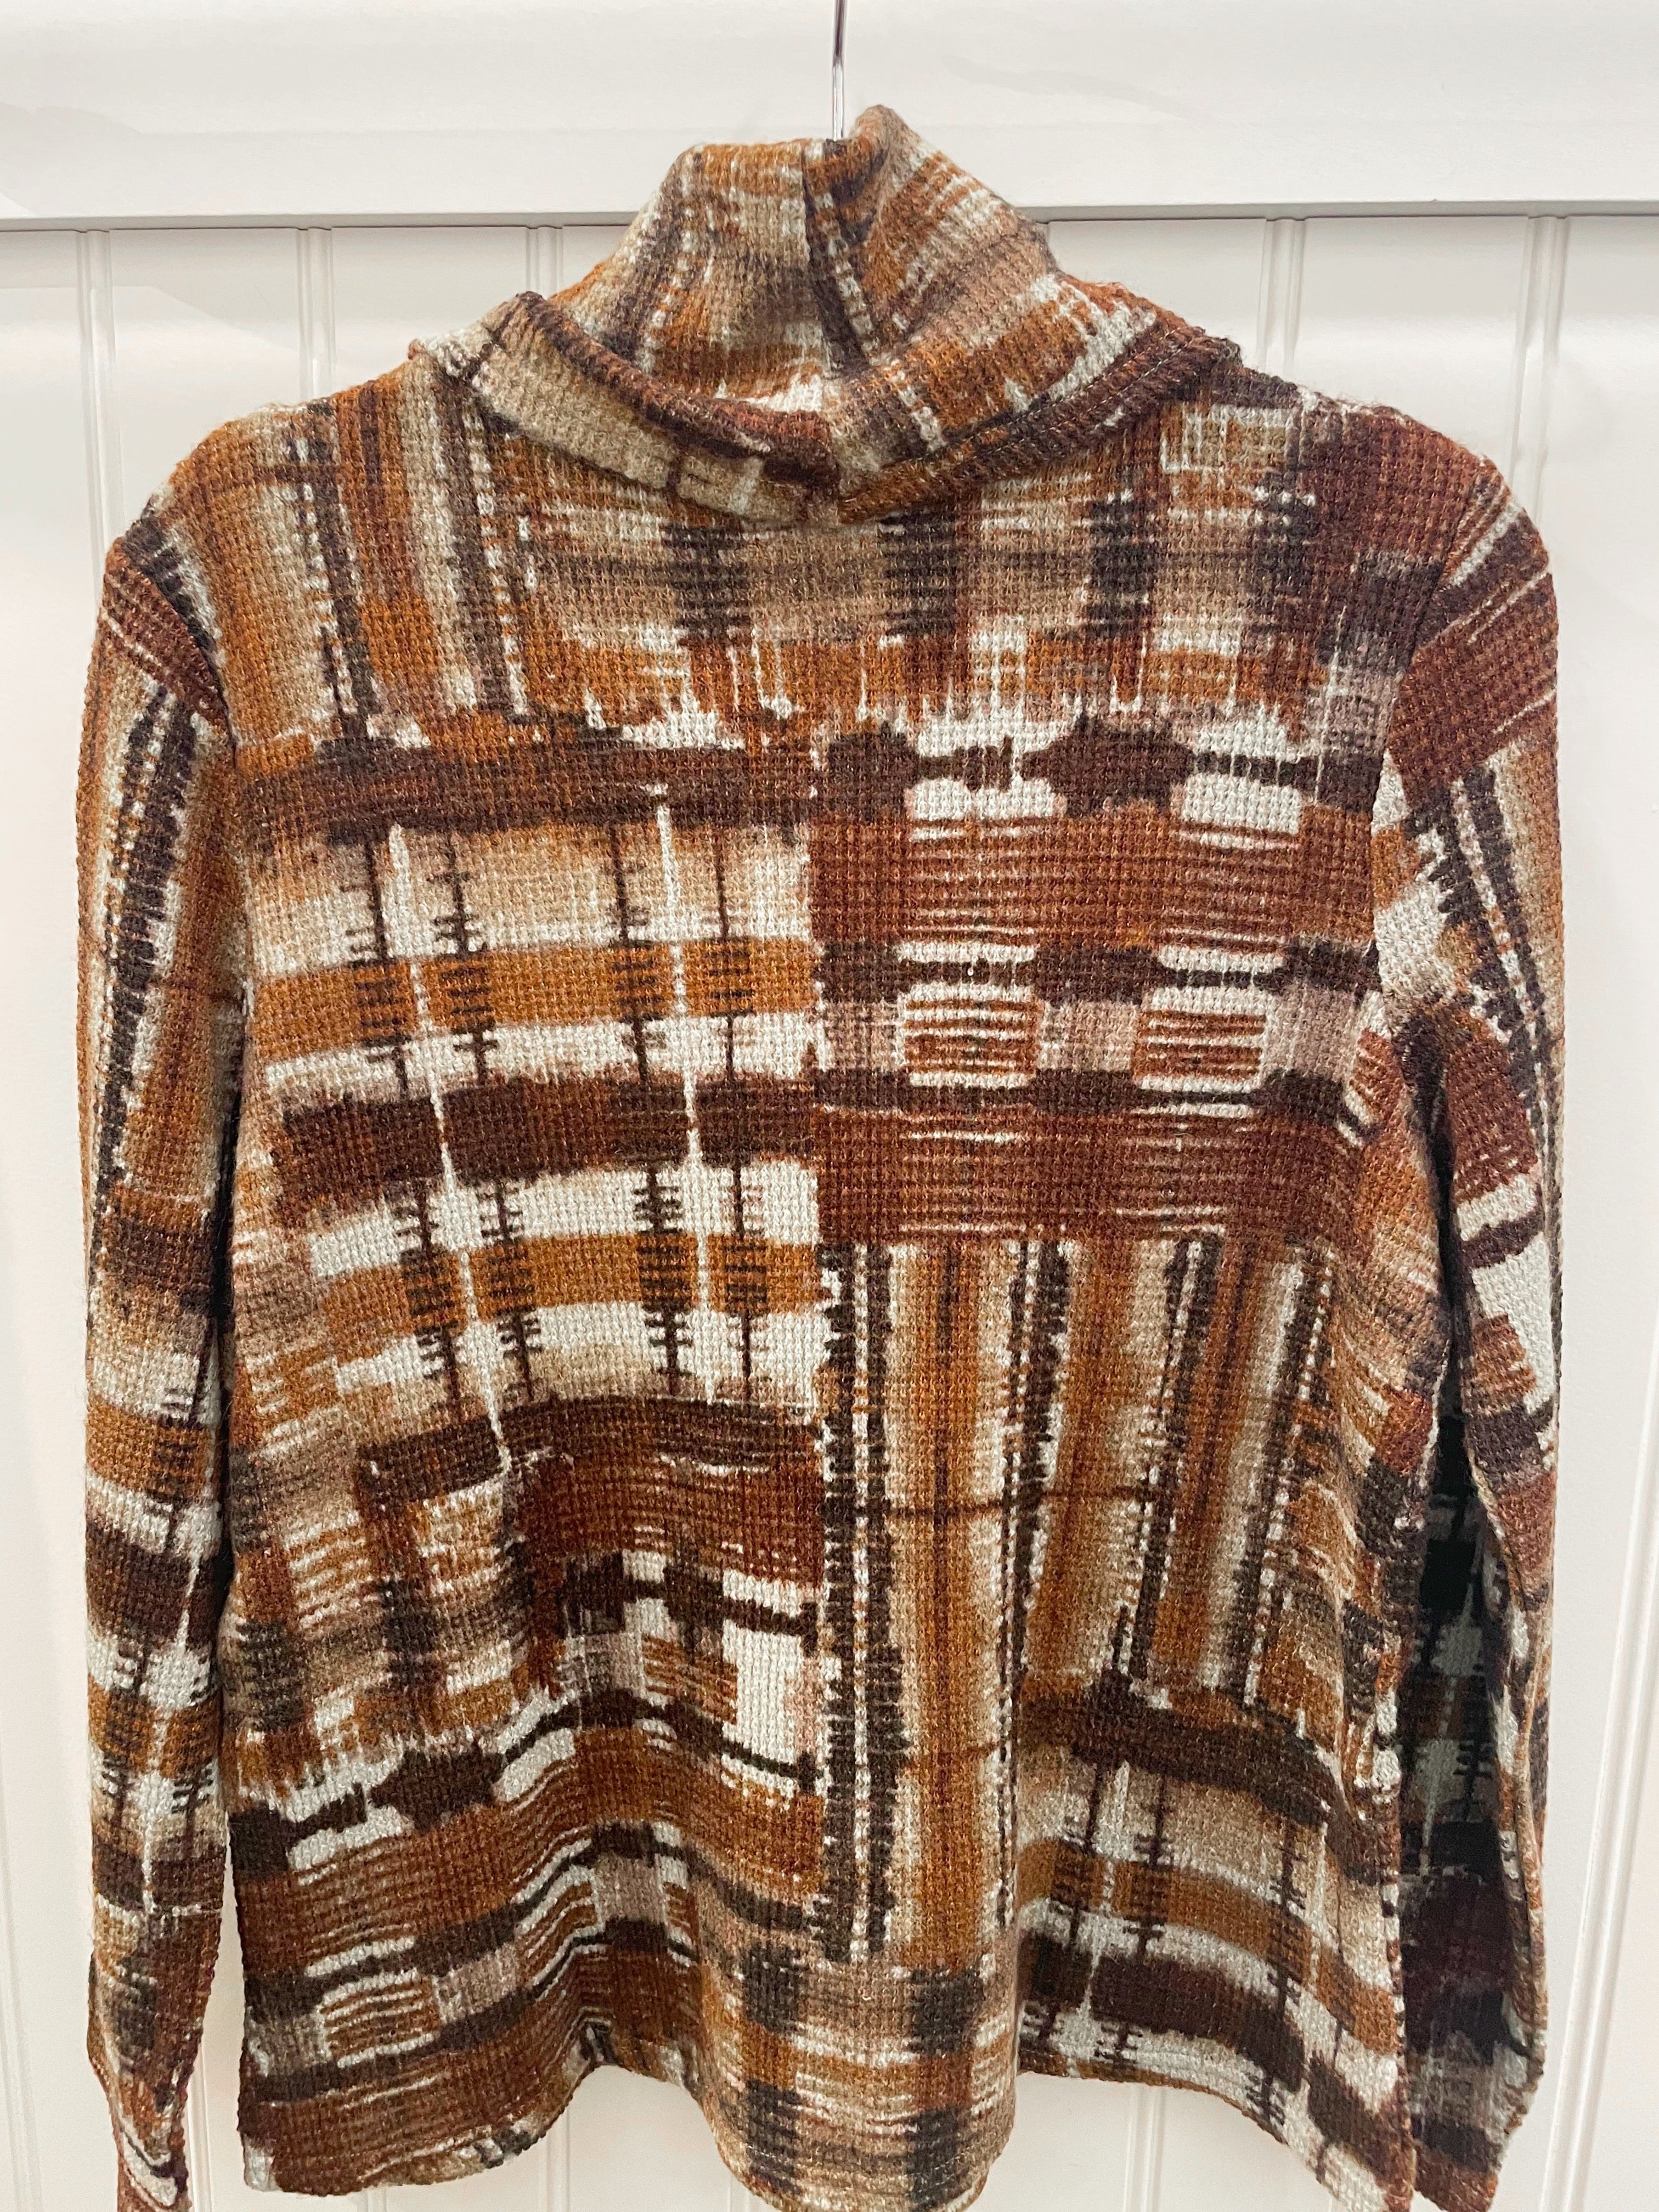 Mirage Cowl Sweater